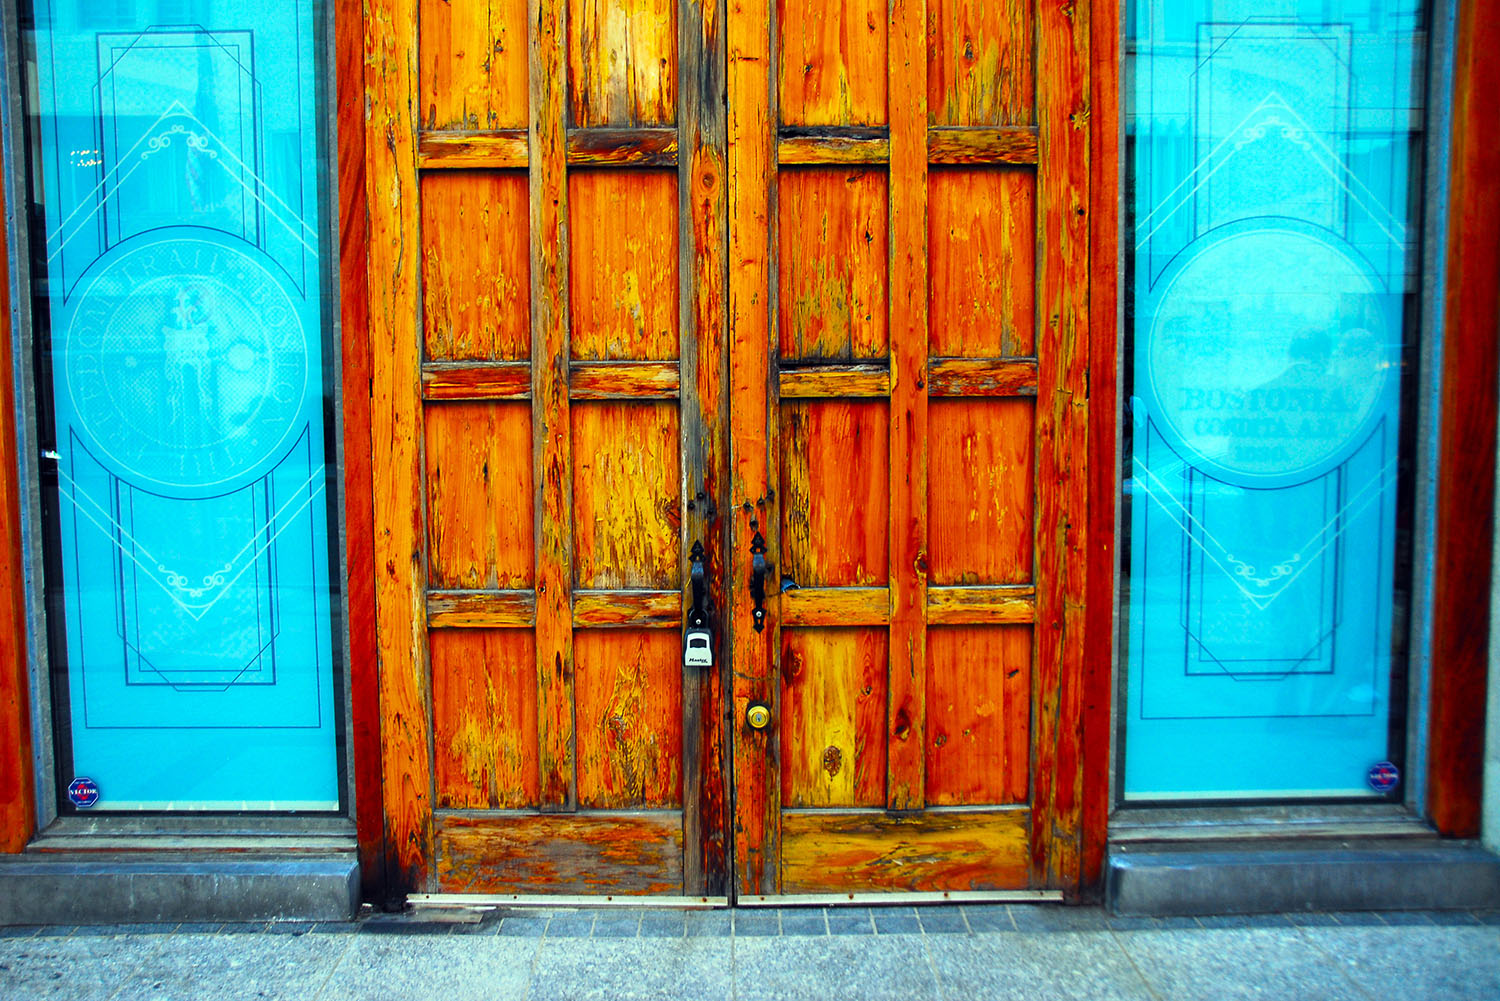 Doors_Wooden_Art_Deco_Glass_Blue_Architecture_Boston_Massachusetts.jpg